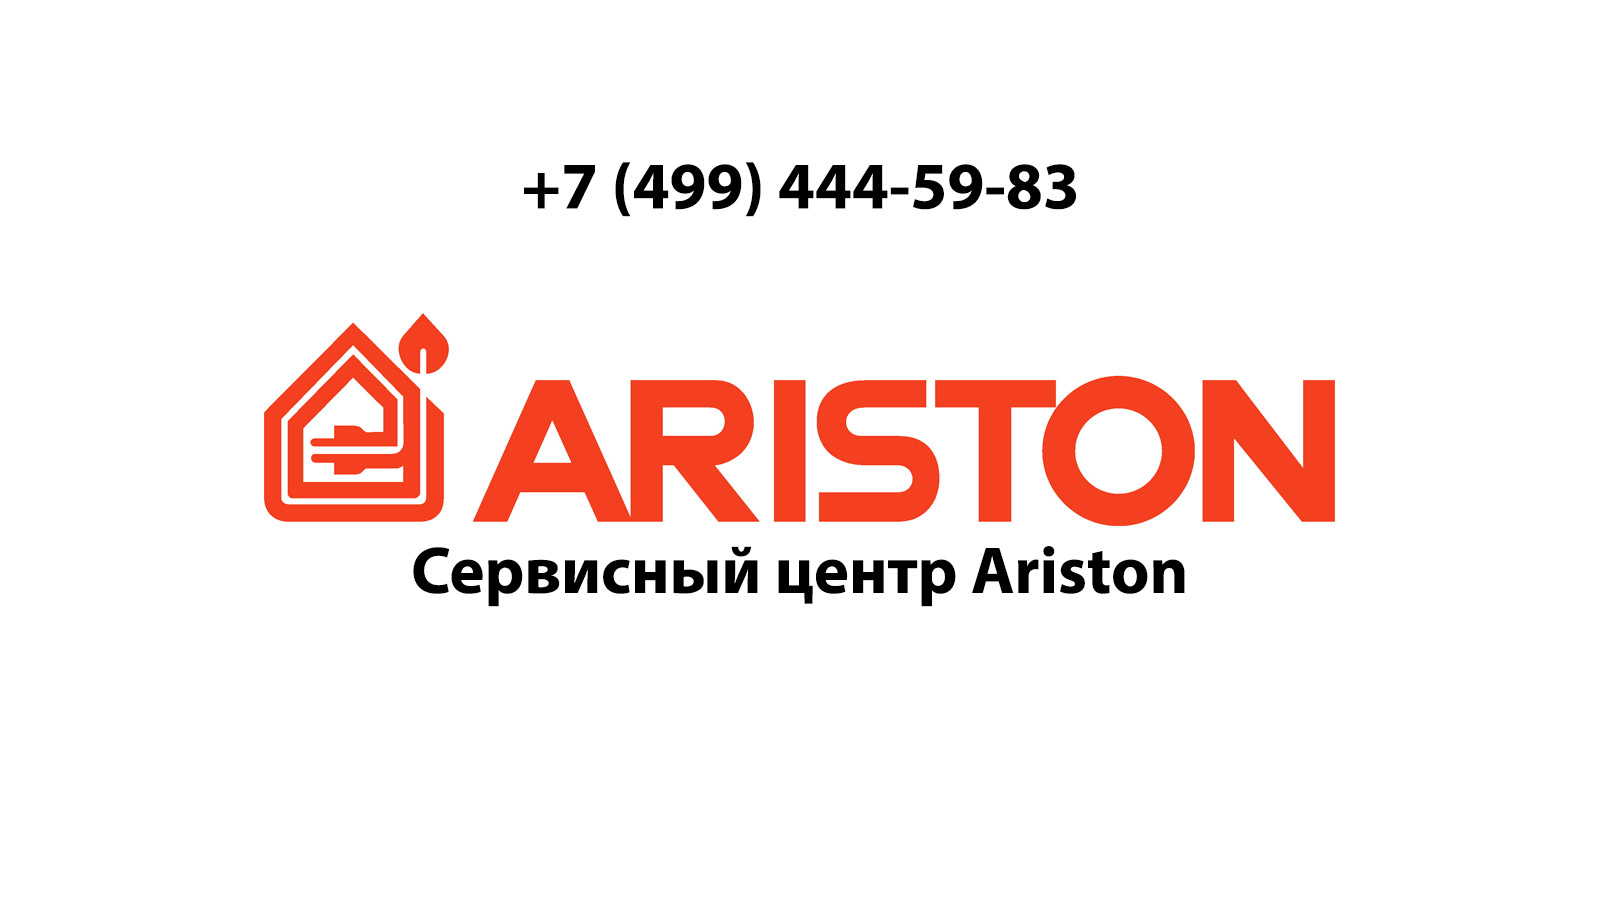 Ariston com